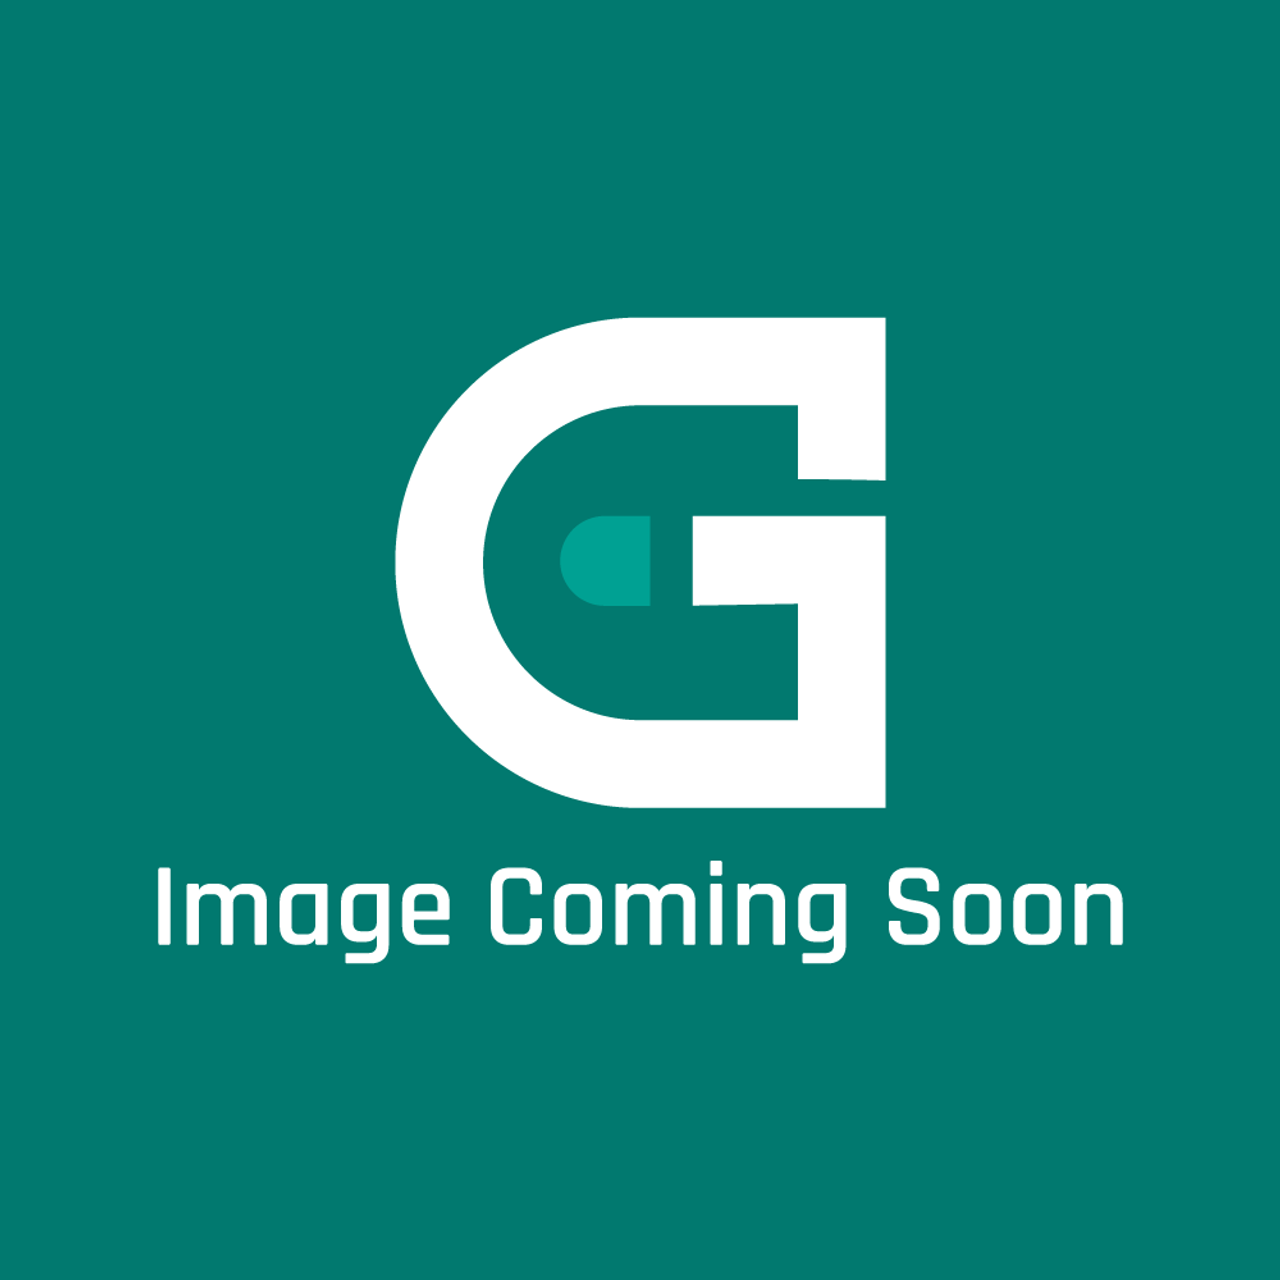 GE Appliances WB56X33311 - Stainless Steel Microwave Door - Image Coming Soon!